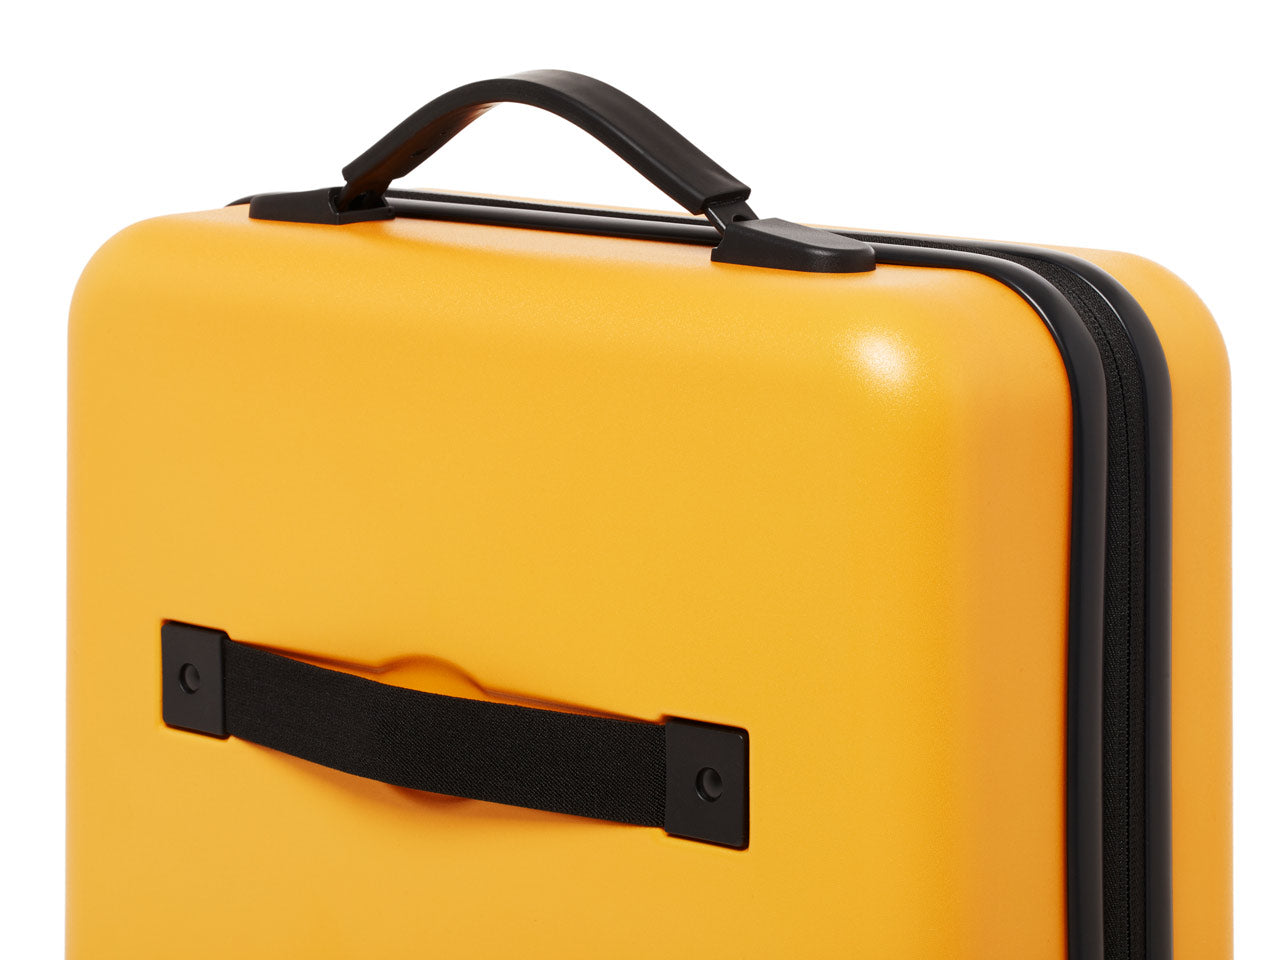 Kakao Friends Backpackers Yellow Mini Travel Bag Suitcase Ryan